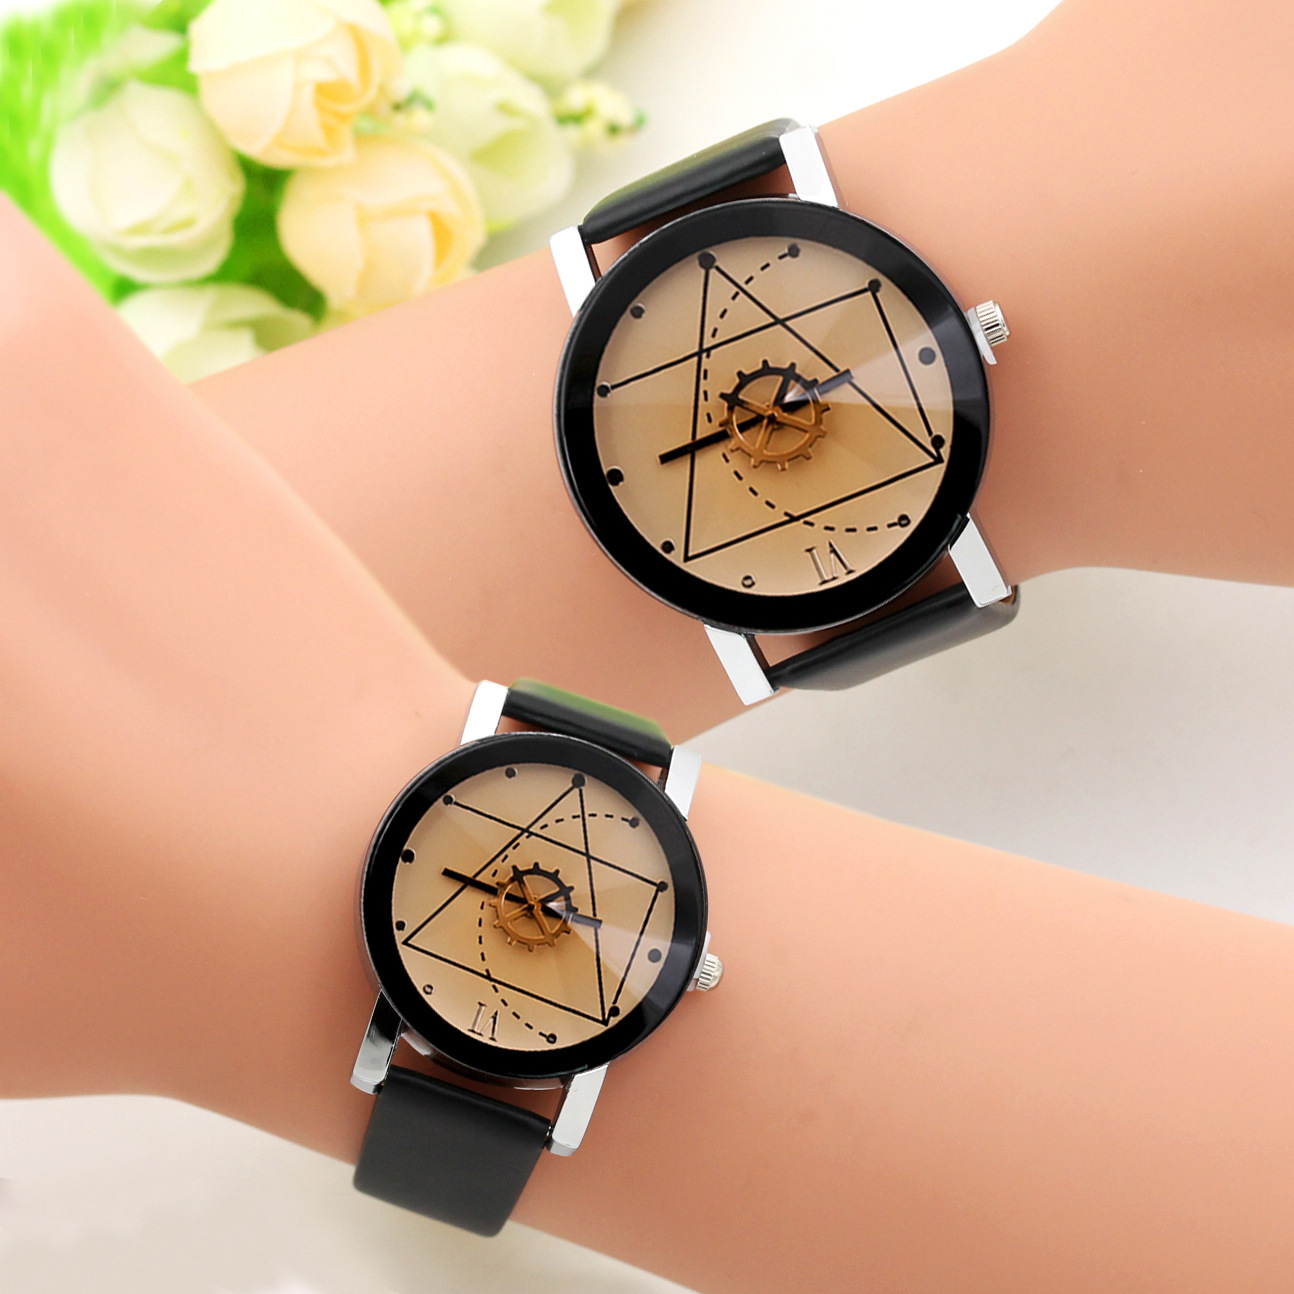 Latest gear second hand couple watch,wrist watch women branded watch custom Featured Image